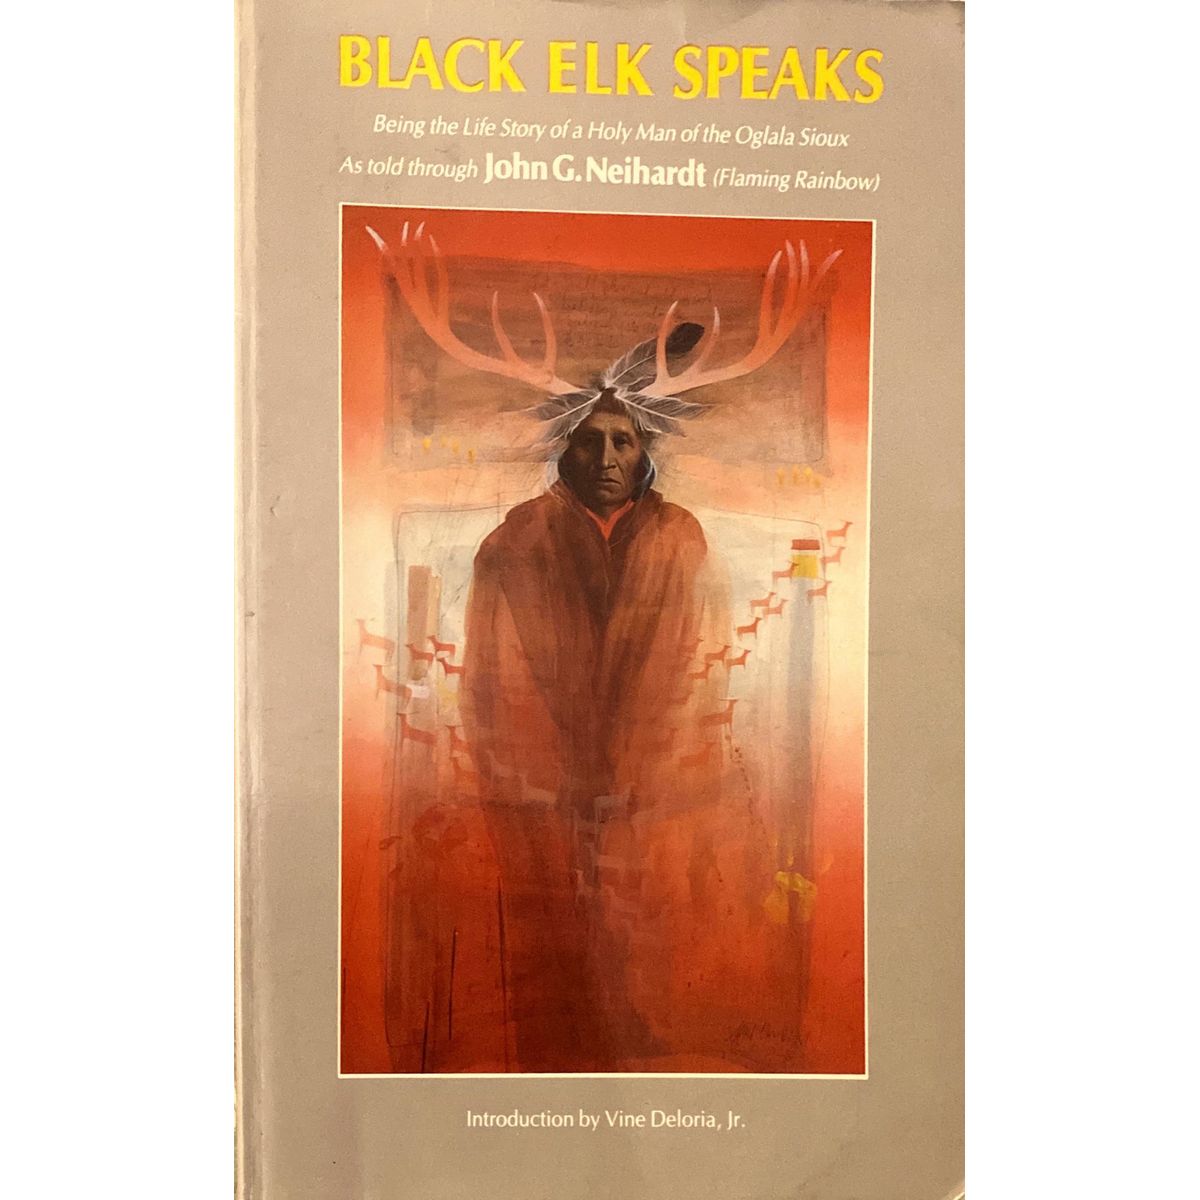 ISBN: 9780803283596 / 0803283598 - Black Elk Speaks by Black Elk & John G. Neihardt [1988]